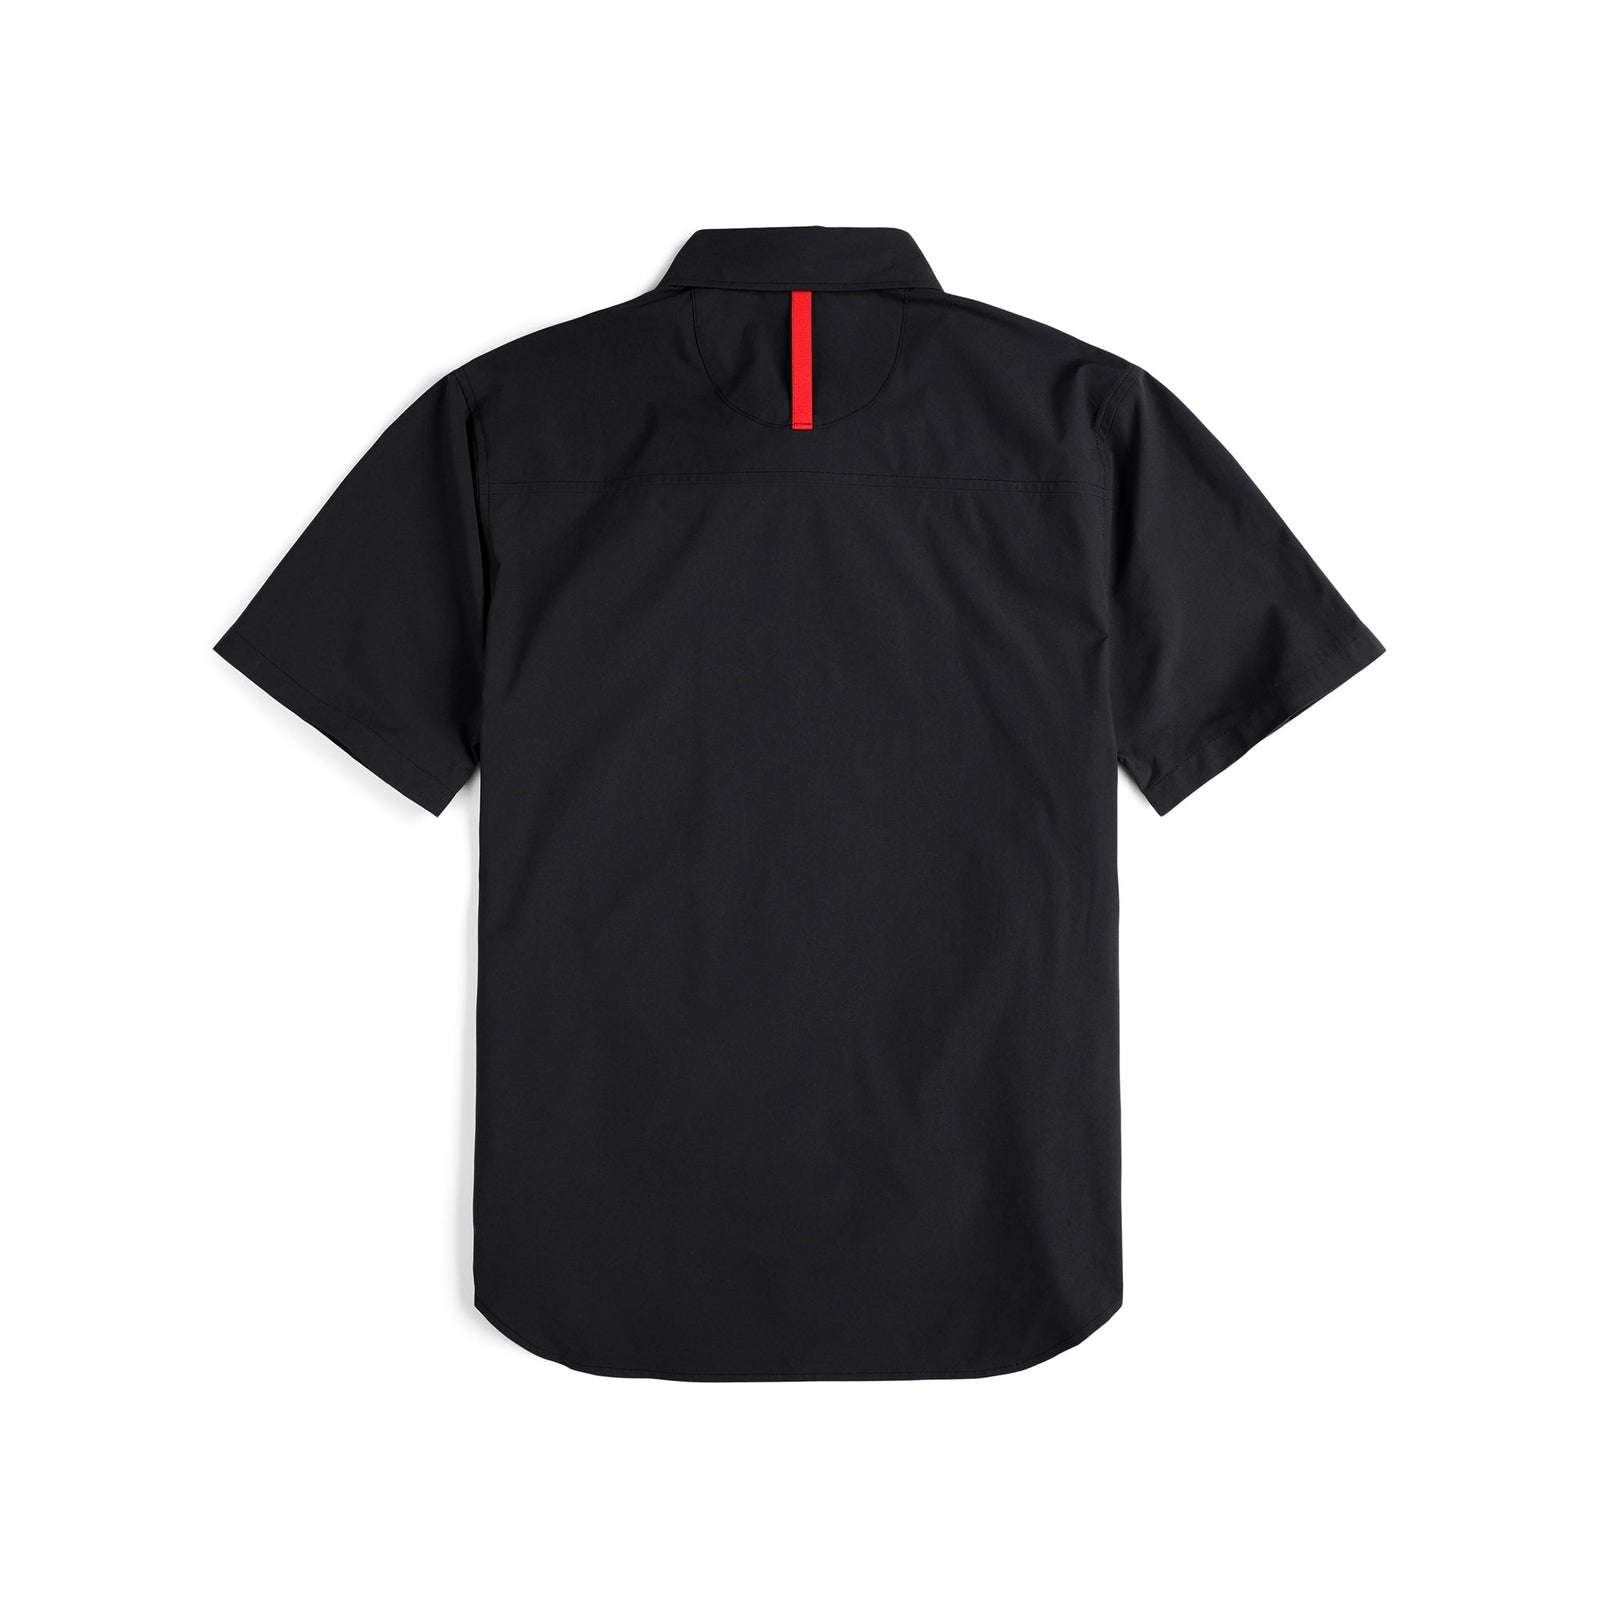 Back shot of Topo Designs Men's Global Shirt Short Sleeve 30+ UPF rated travel shirt in "Black".